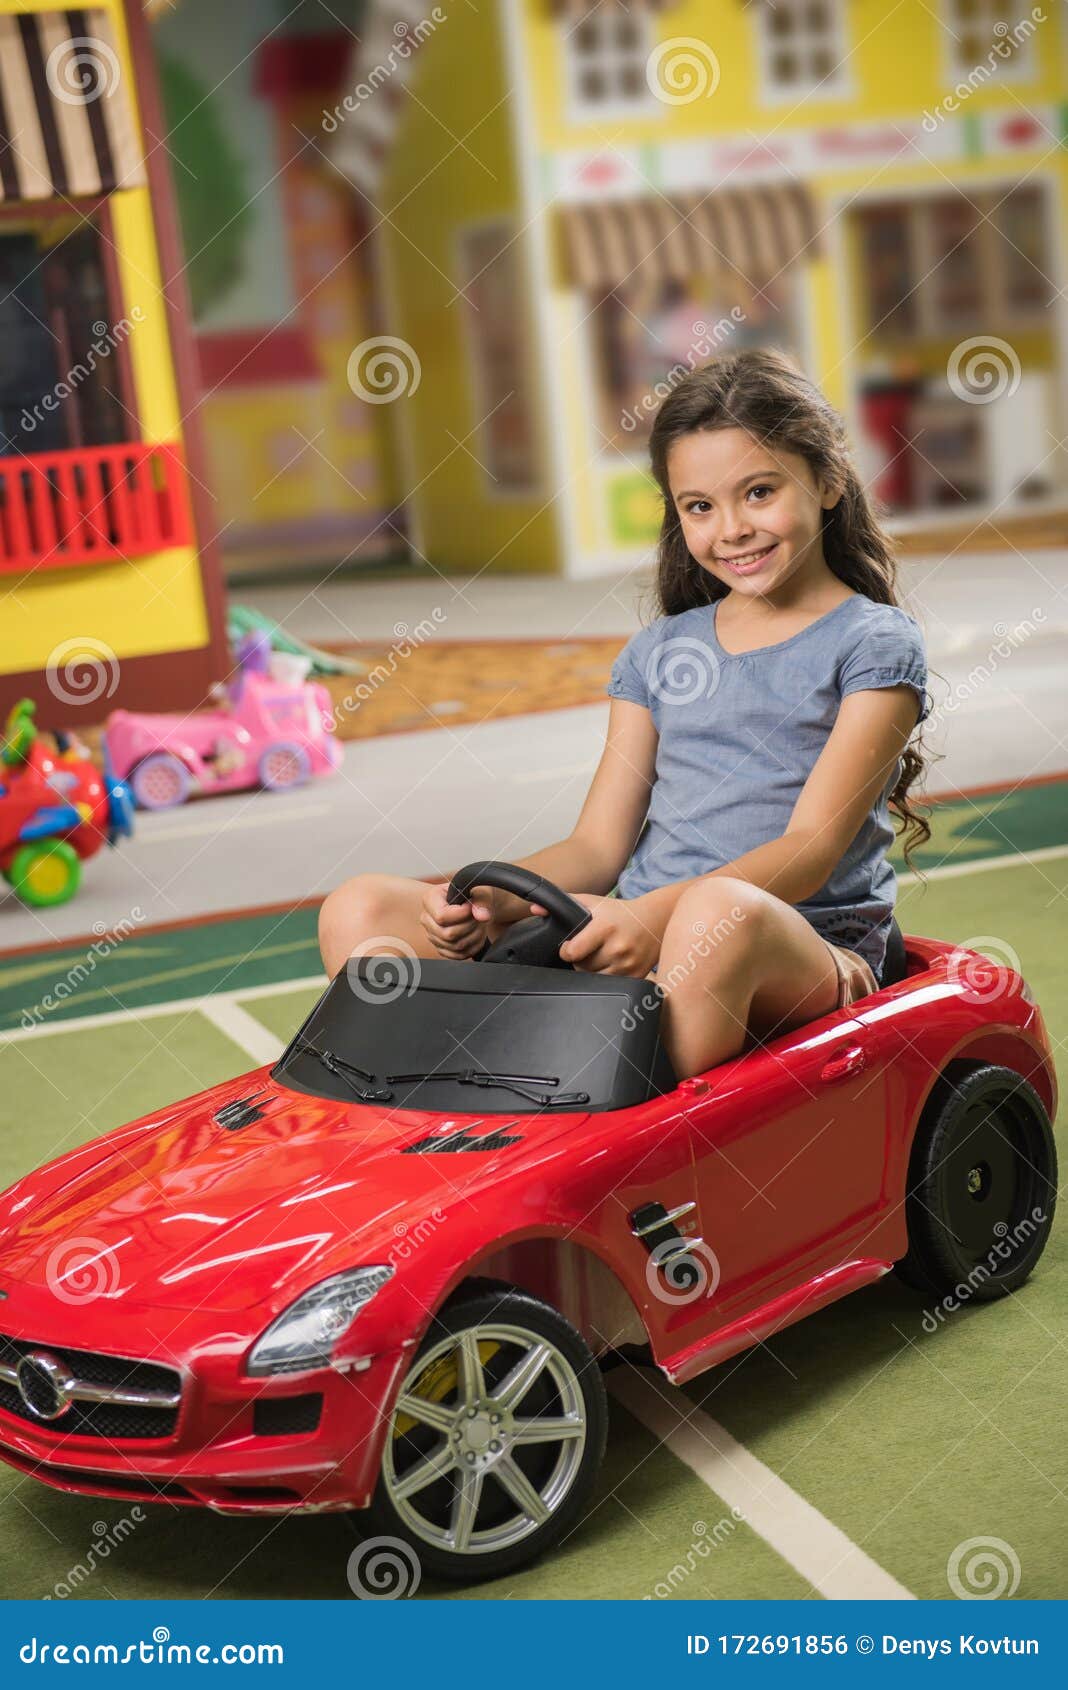 car play kids